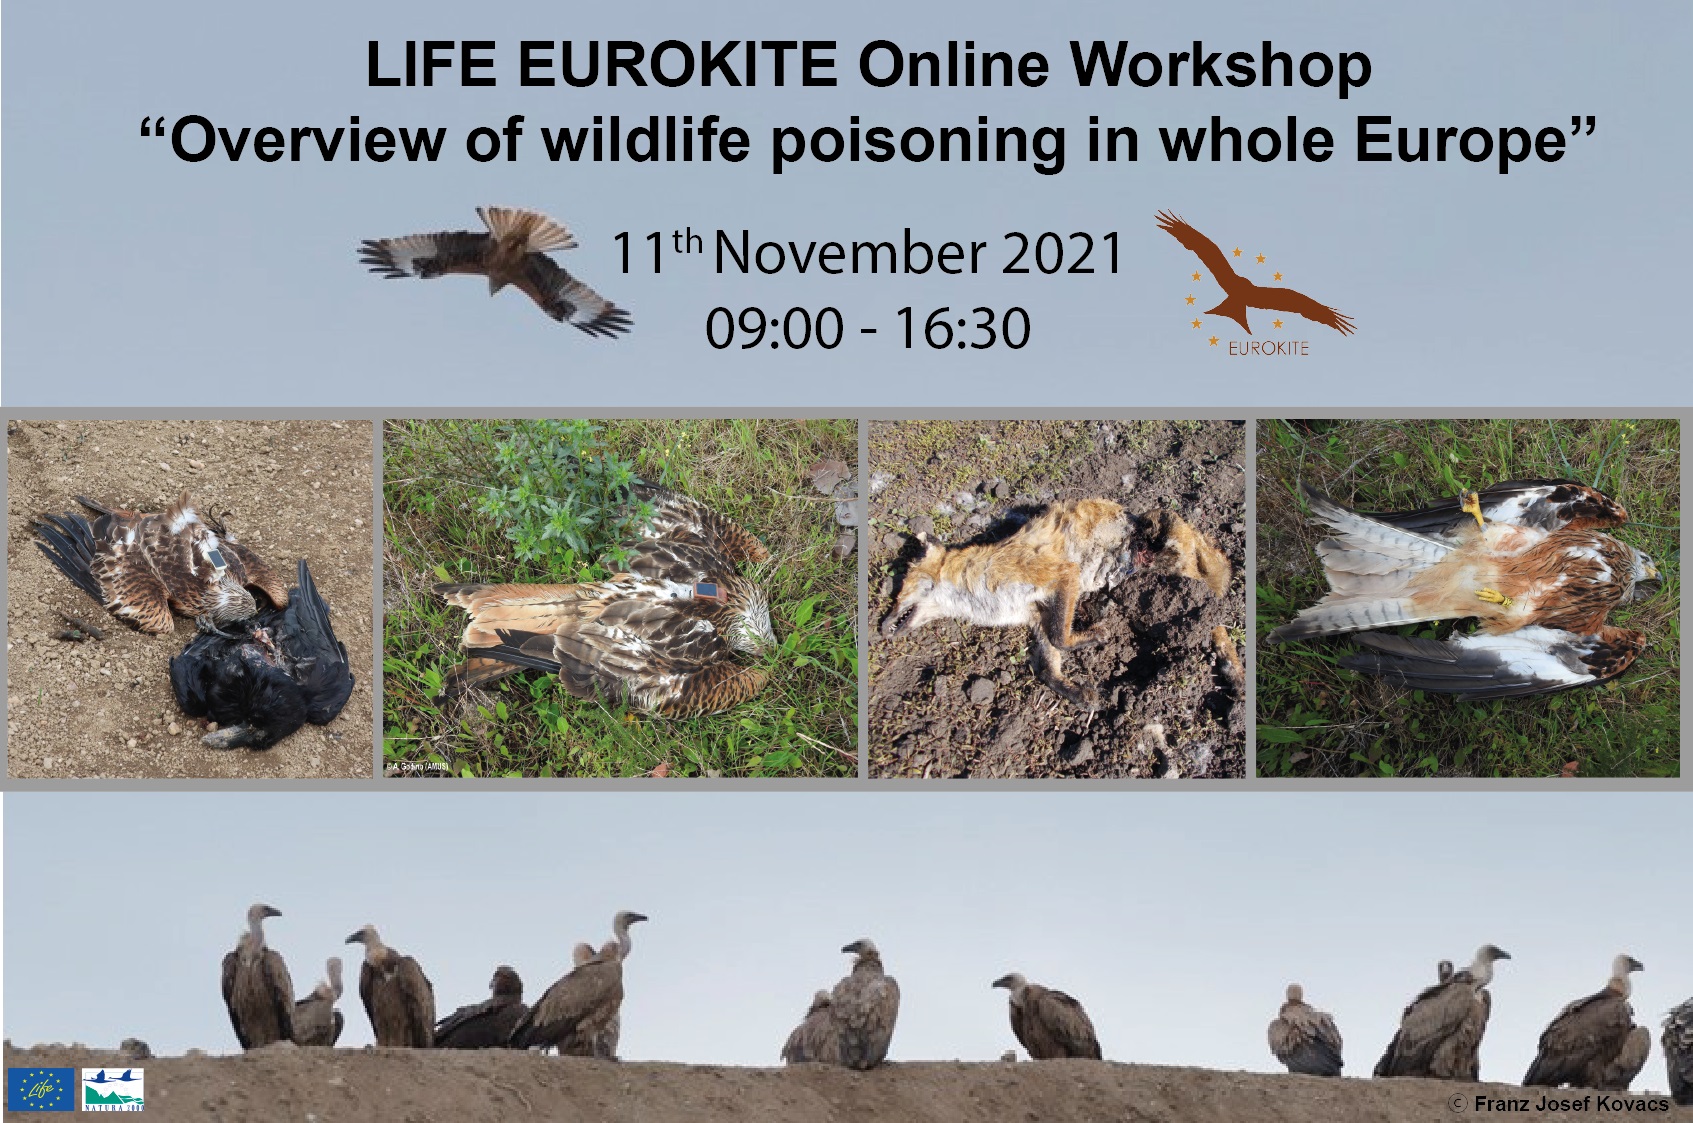 LIFE EUROKITE webinar on wildlife poisoning in Europe 